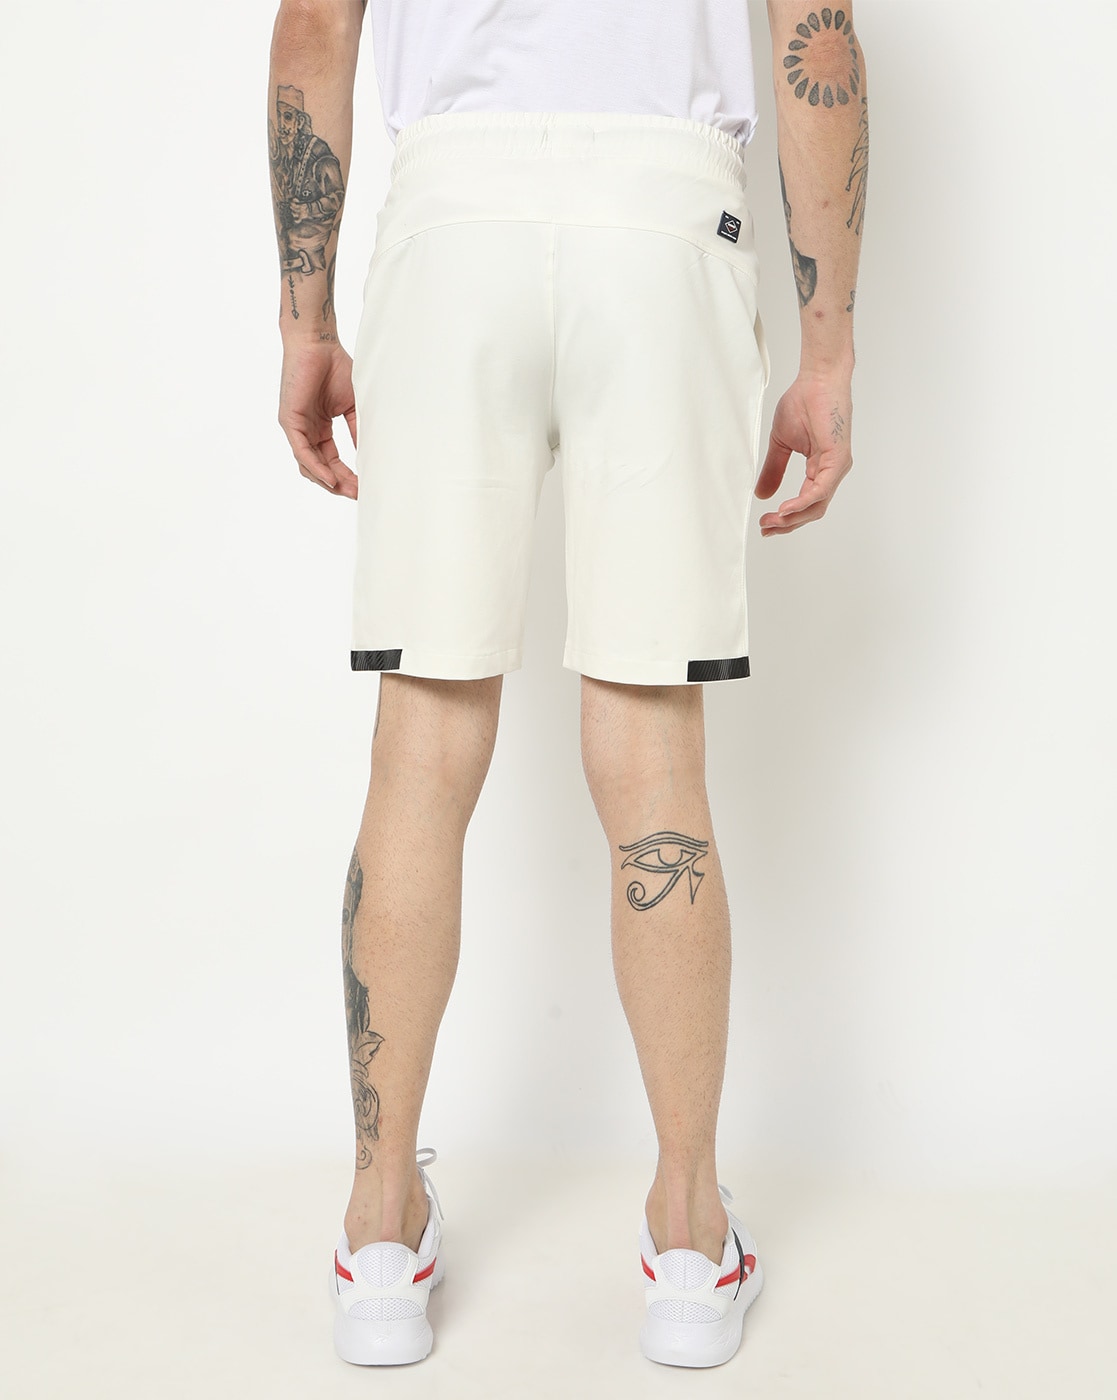 White linen short set | White short set, Bright shorts, Summer wardrobe  essentials